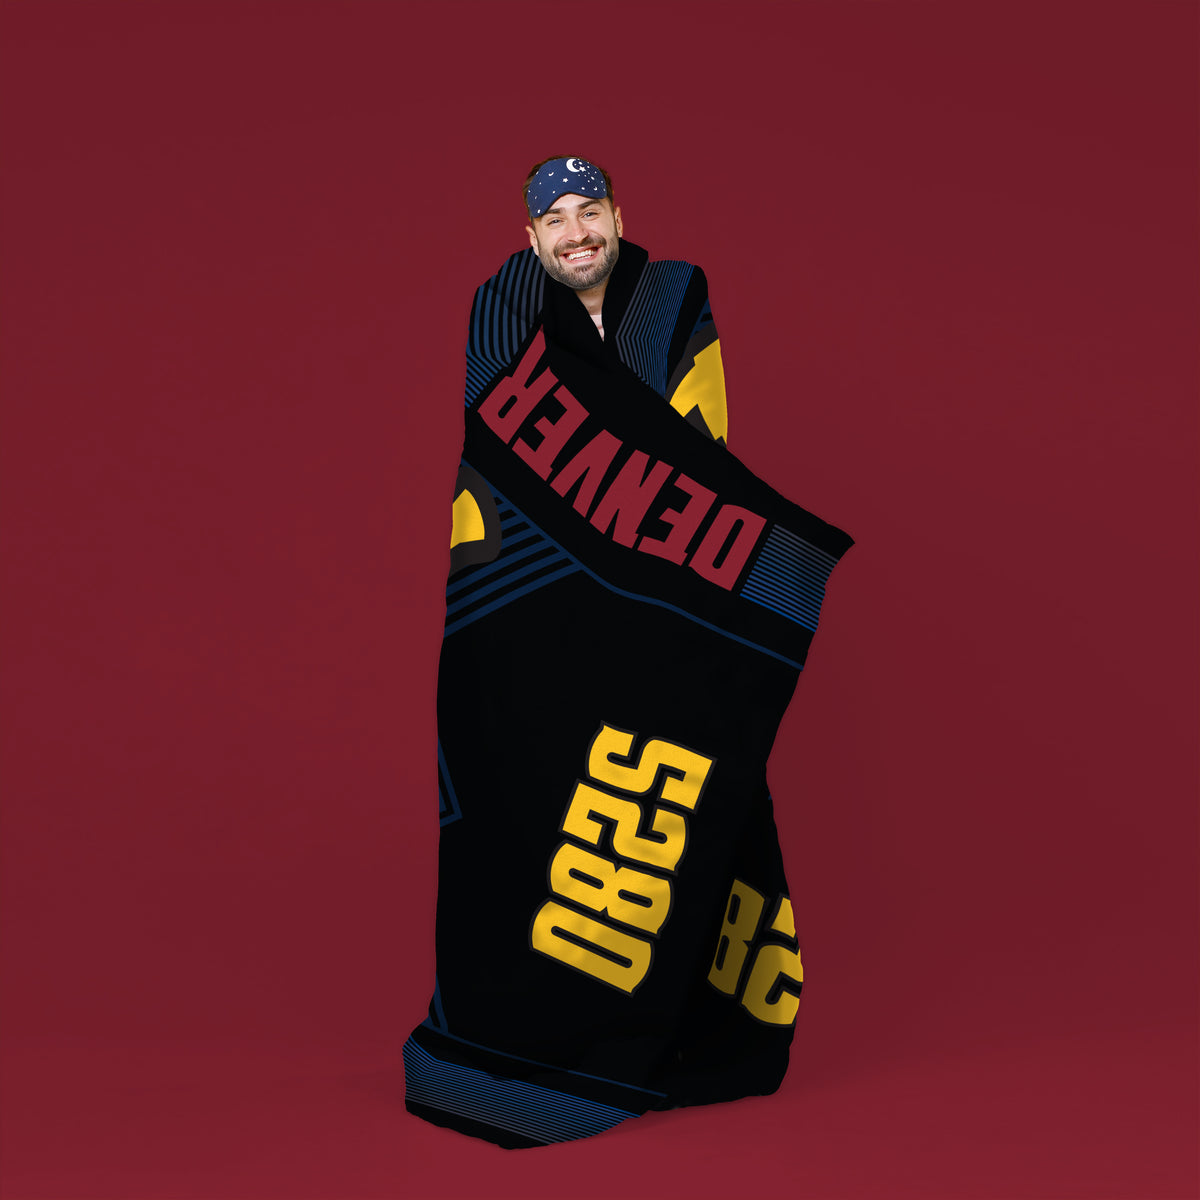 Denver Nuggets City Edition 60” x 80” Raschel Plush Blanket